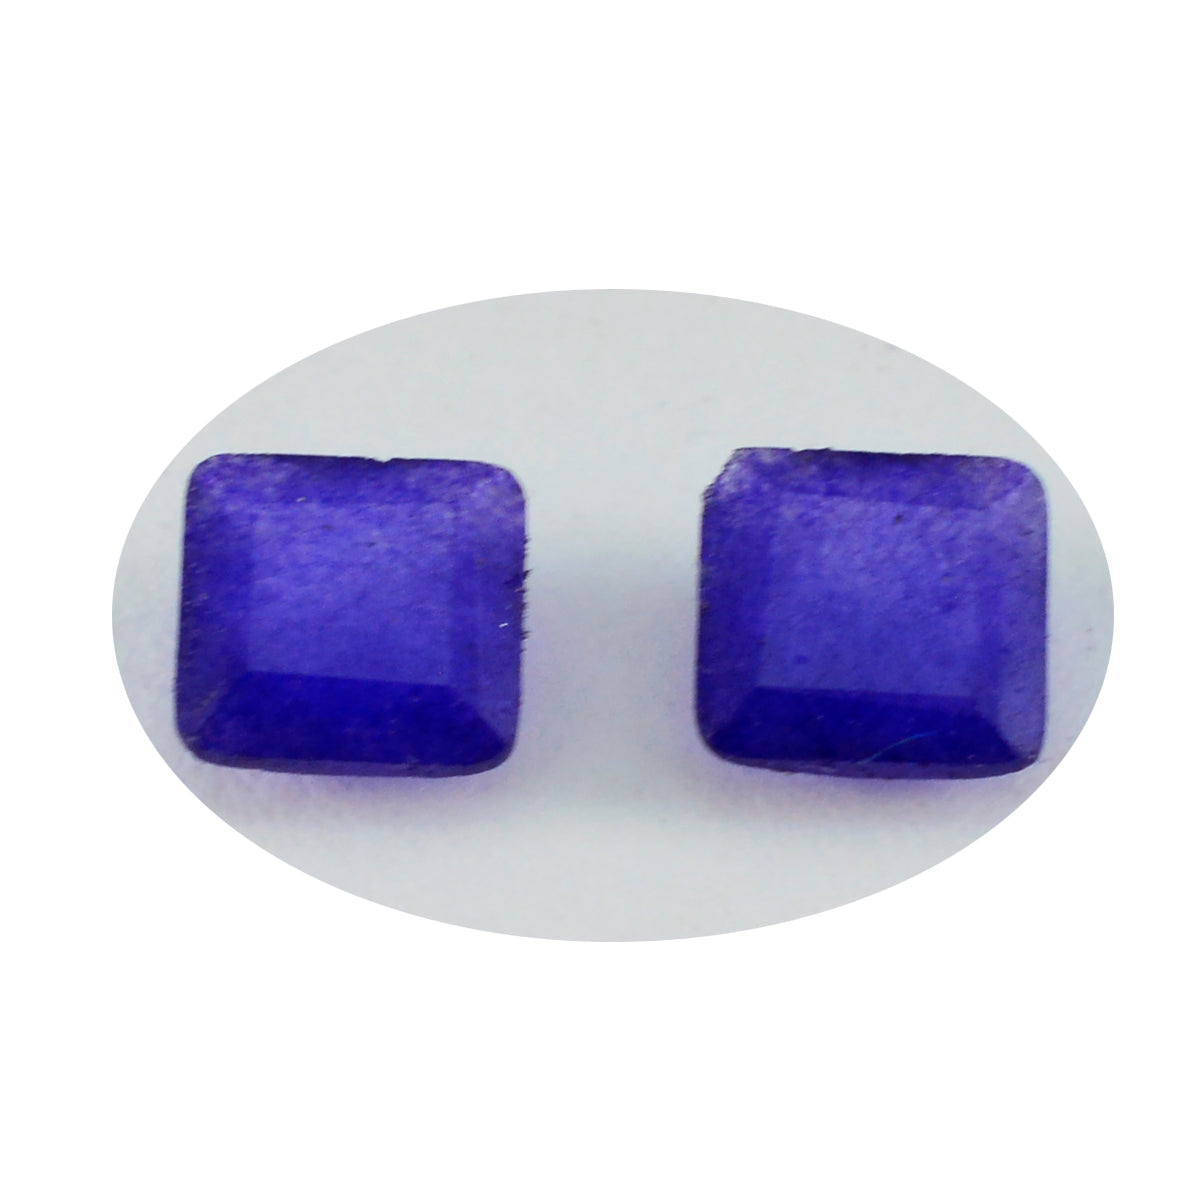 Riyogems 1PC Real Blue Jasper Faceted 8x8 mm Square Shape pretty Quality Loose Gemstone